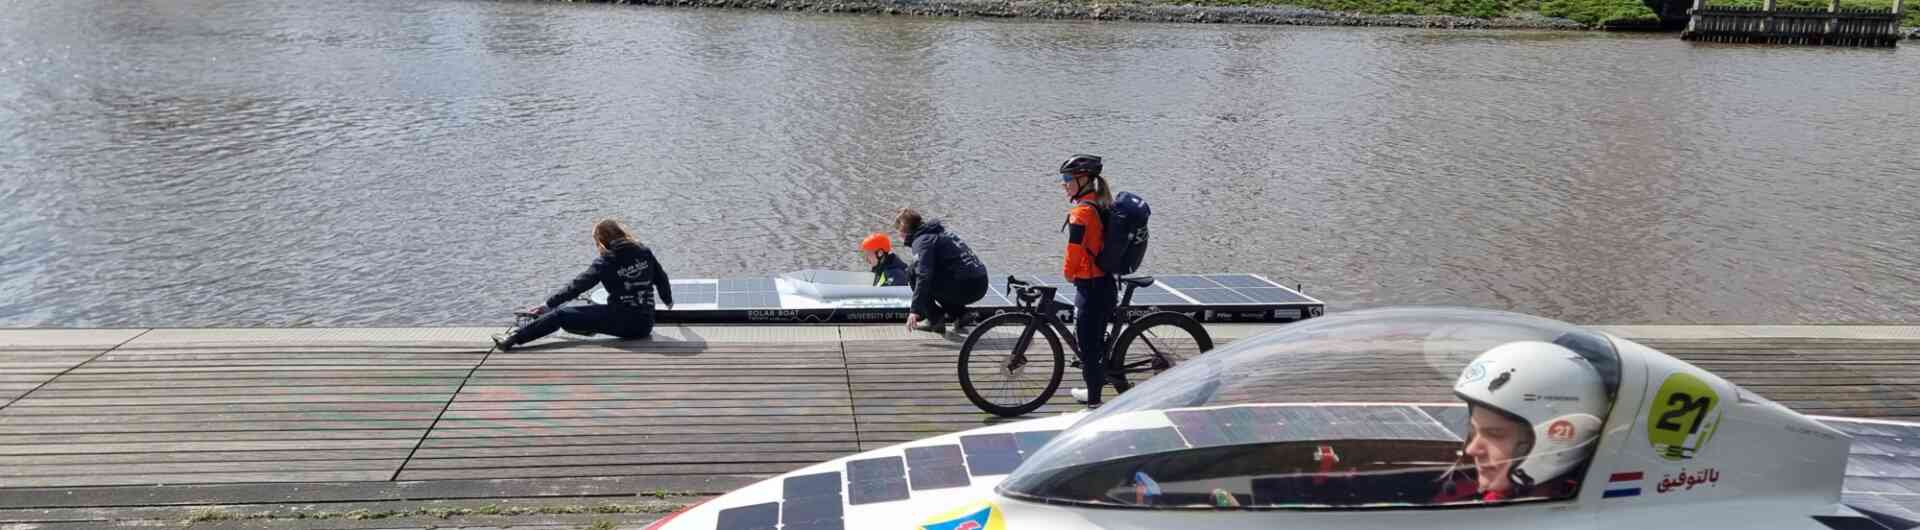 Solar Team Twente vs Solar Boat